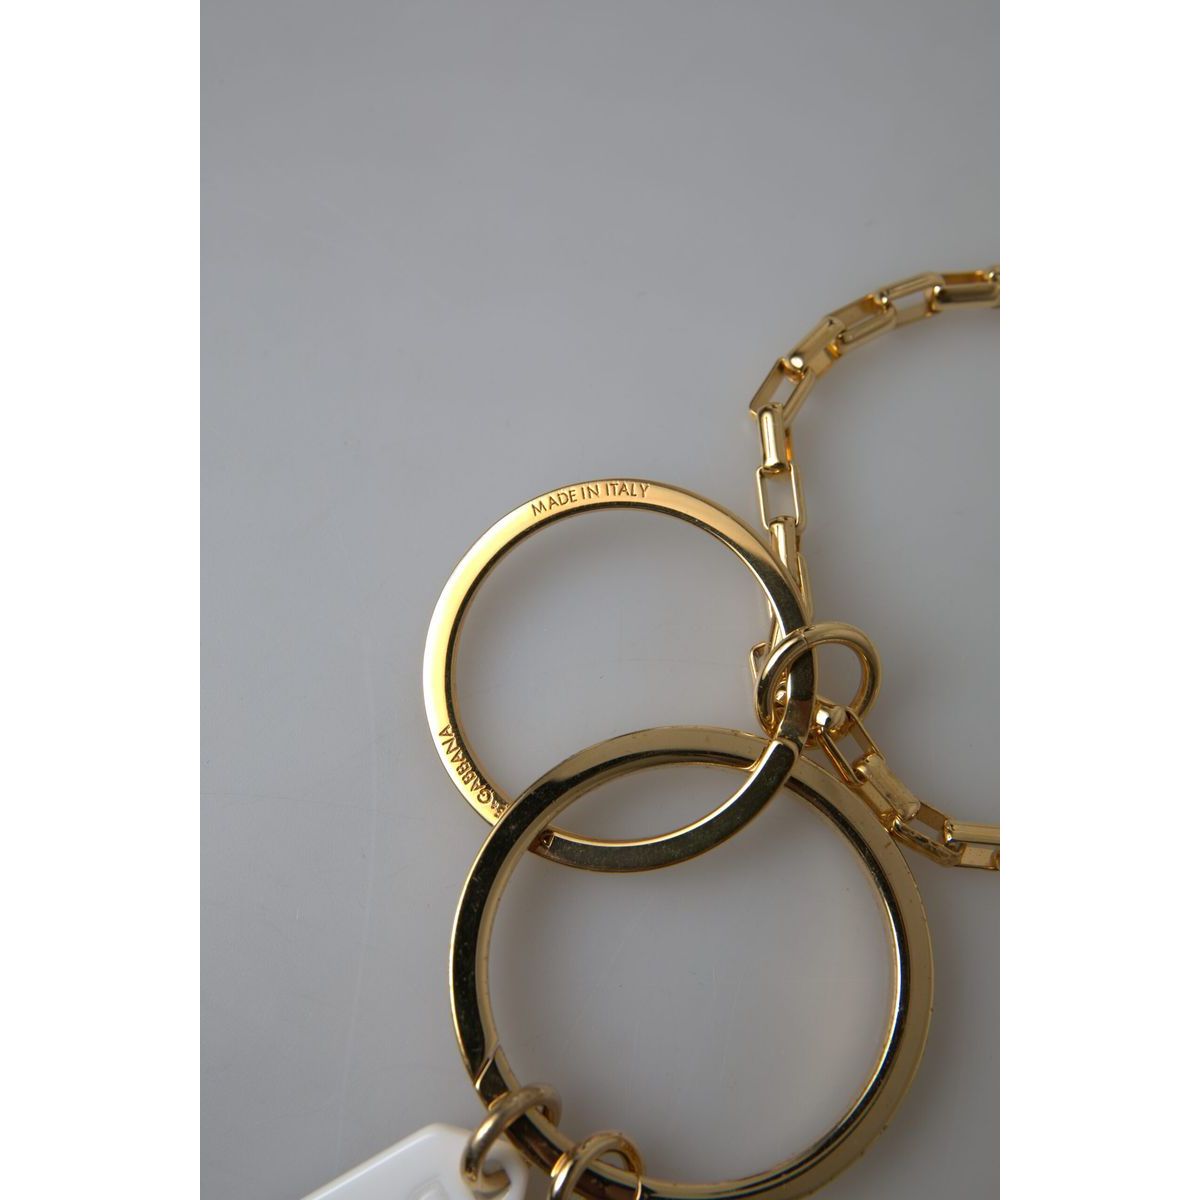 Dolce & Gabbana Chic Gold Charm Chain Necklace gold-tone-brass-chain-link-dg-logo-pendant-necklace 465A1294-scaled-c1b4ad6a-a3c_85e3561f-c13c-450b-b9f4-440bb3381205.jpg